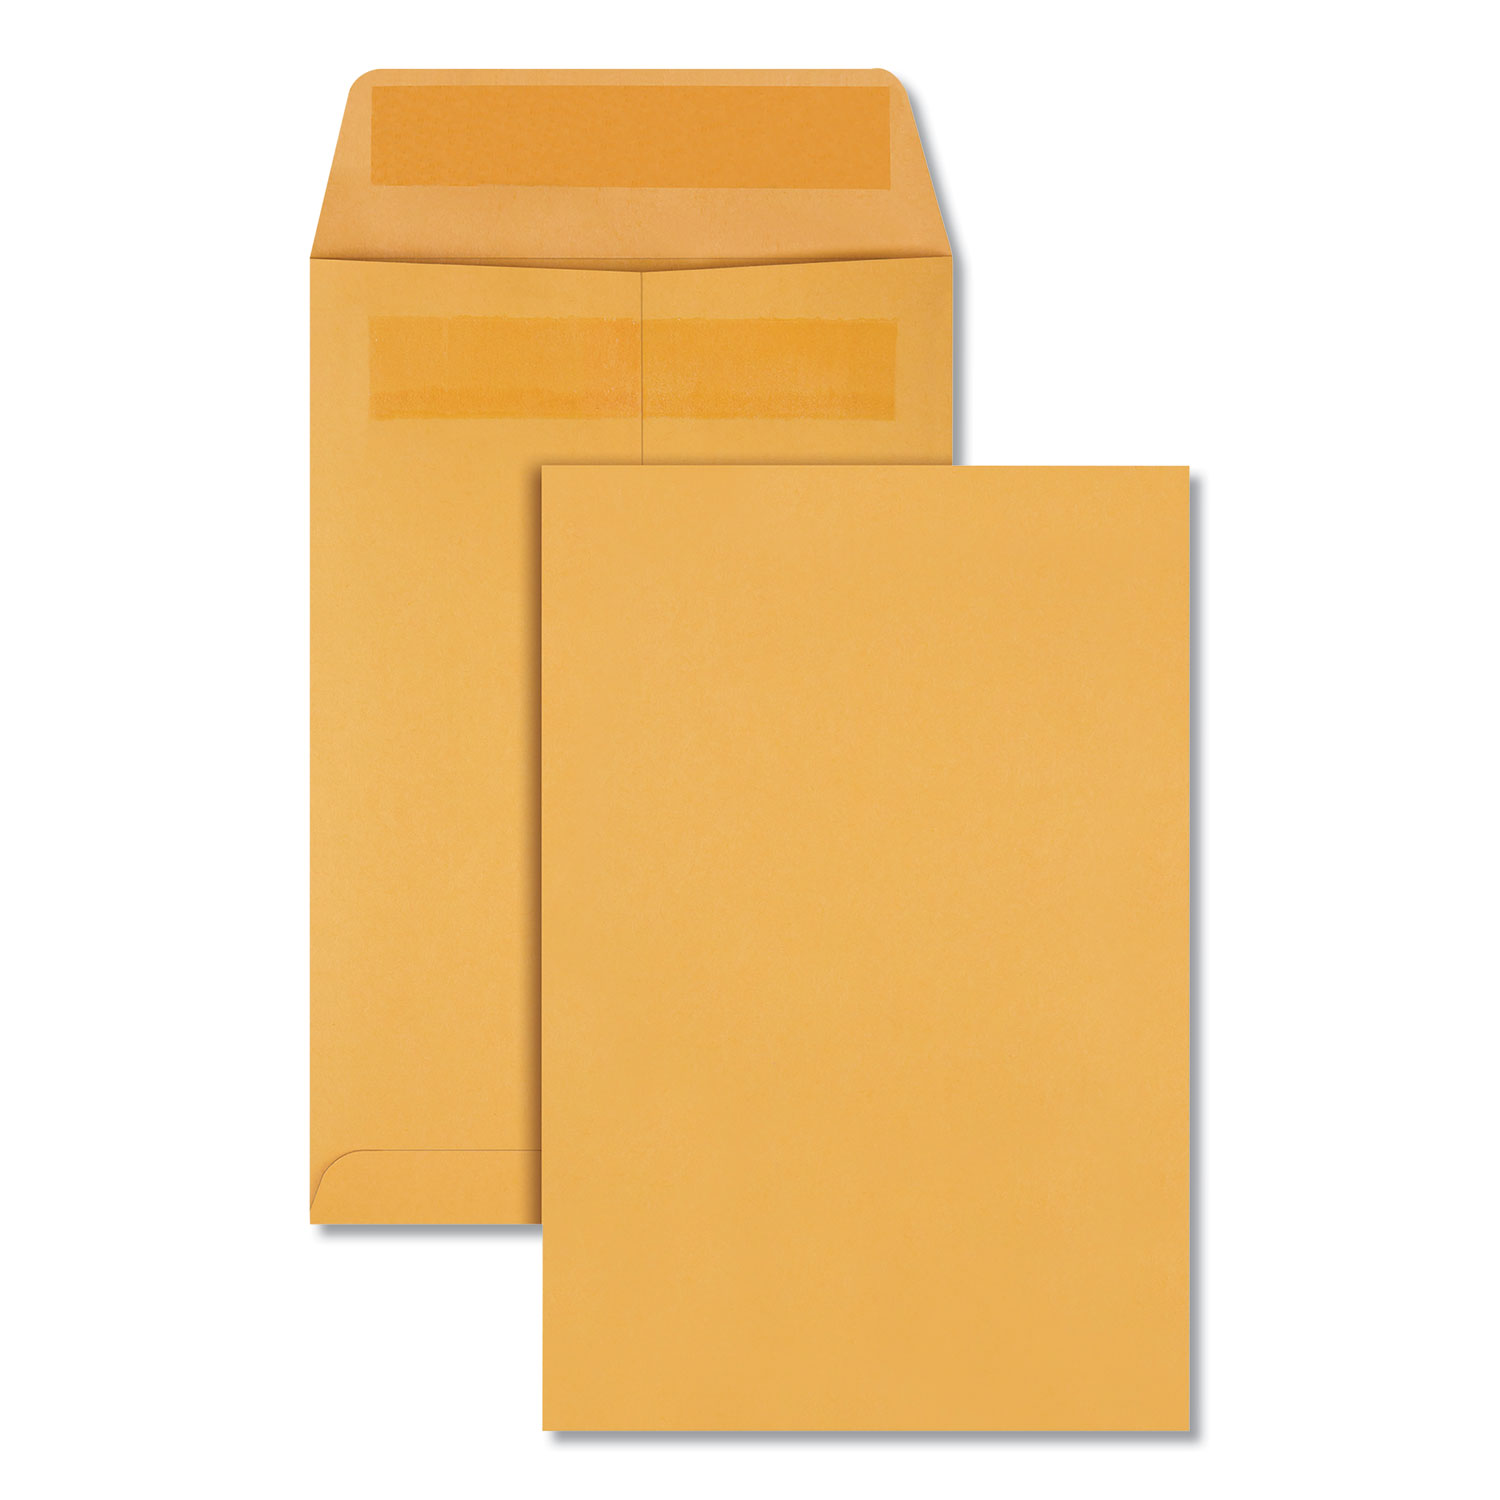  Quality Park QUA43367 Redi-Seal Catalog Envelope, #1 3/4, Cheese Blade Flap, Redi-Seal Closure, 6.5 x 9.5, Brown Kraft, 100/Box (QUA43367) 